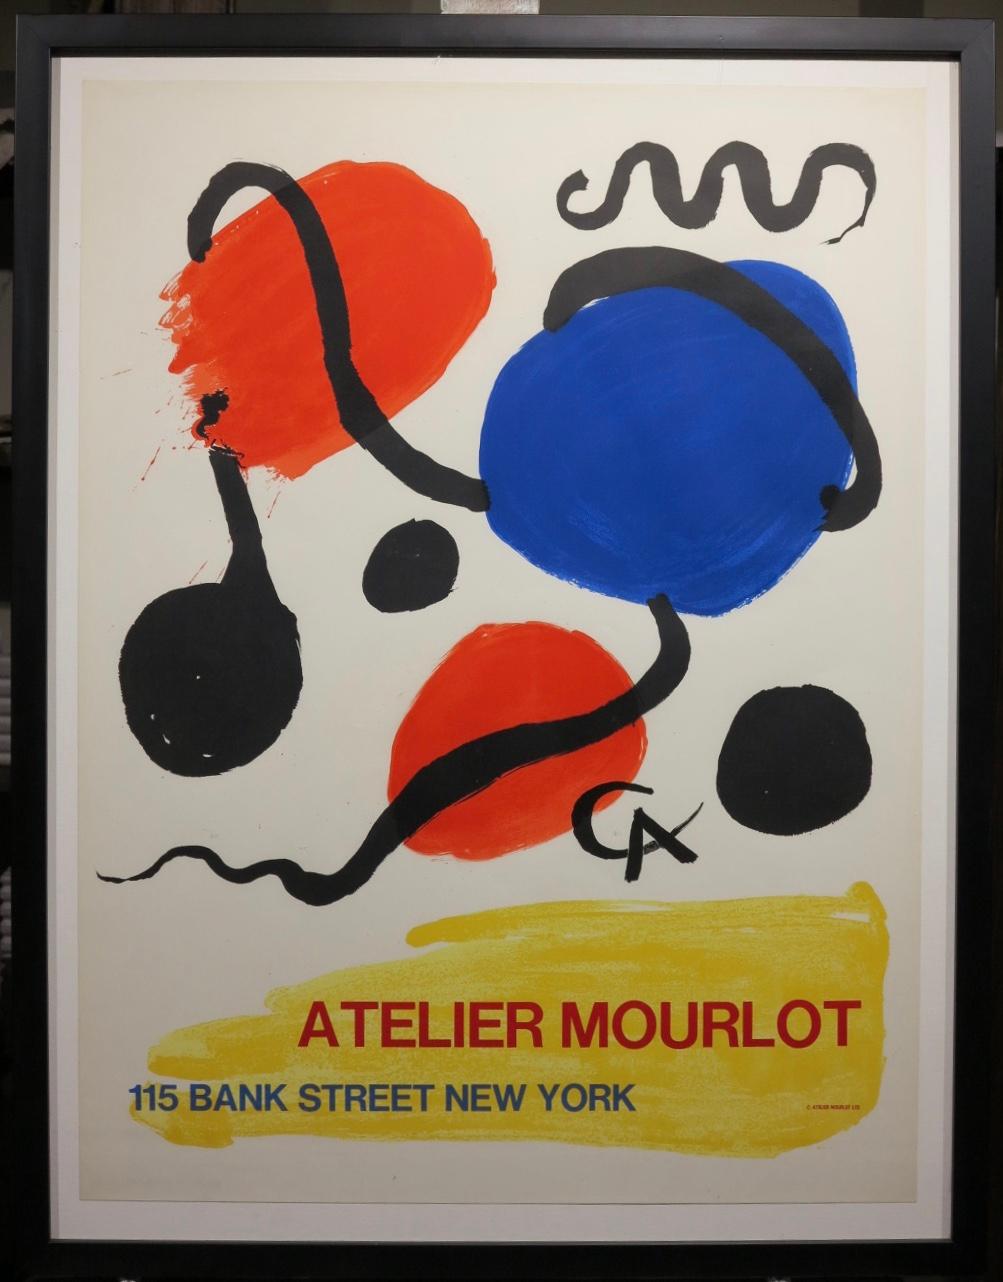 Alexander Calder Abstract Print - Atelier Mourlot 1967 lithograph poster